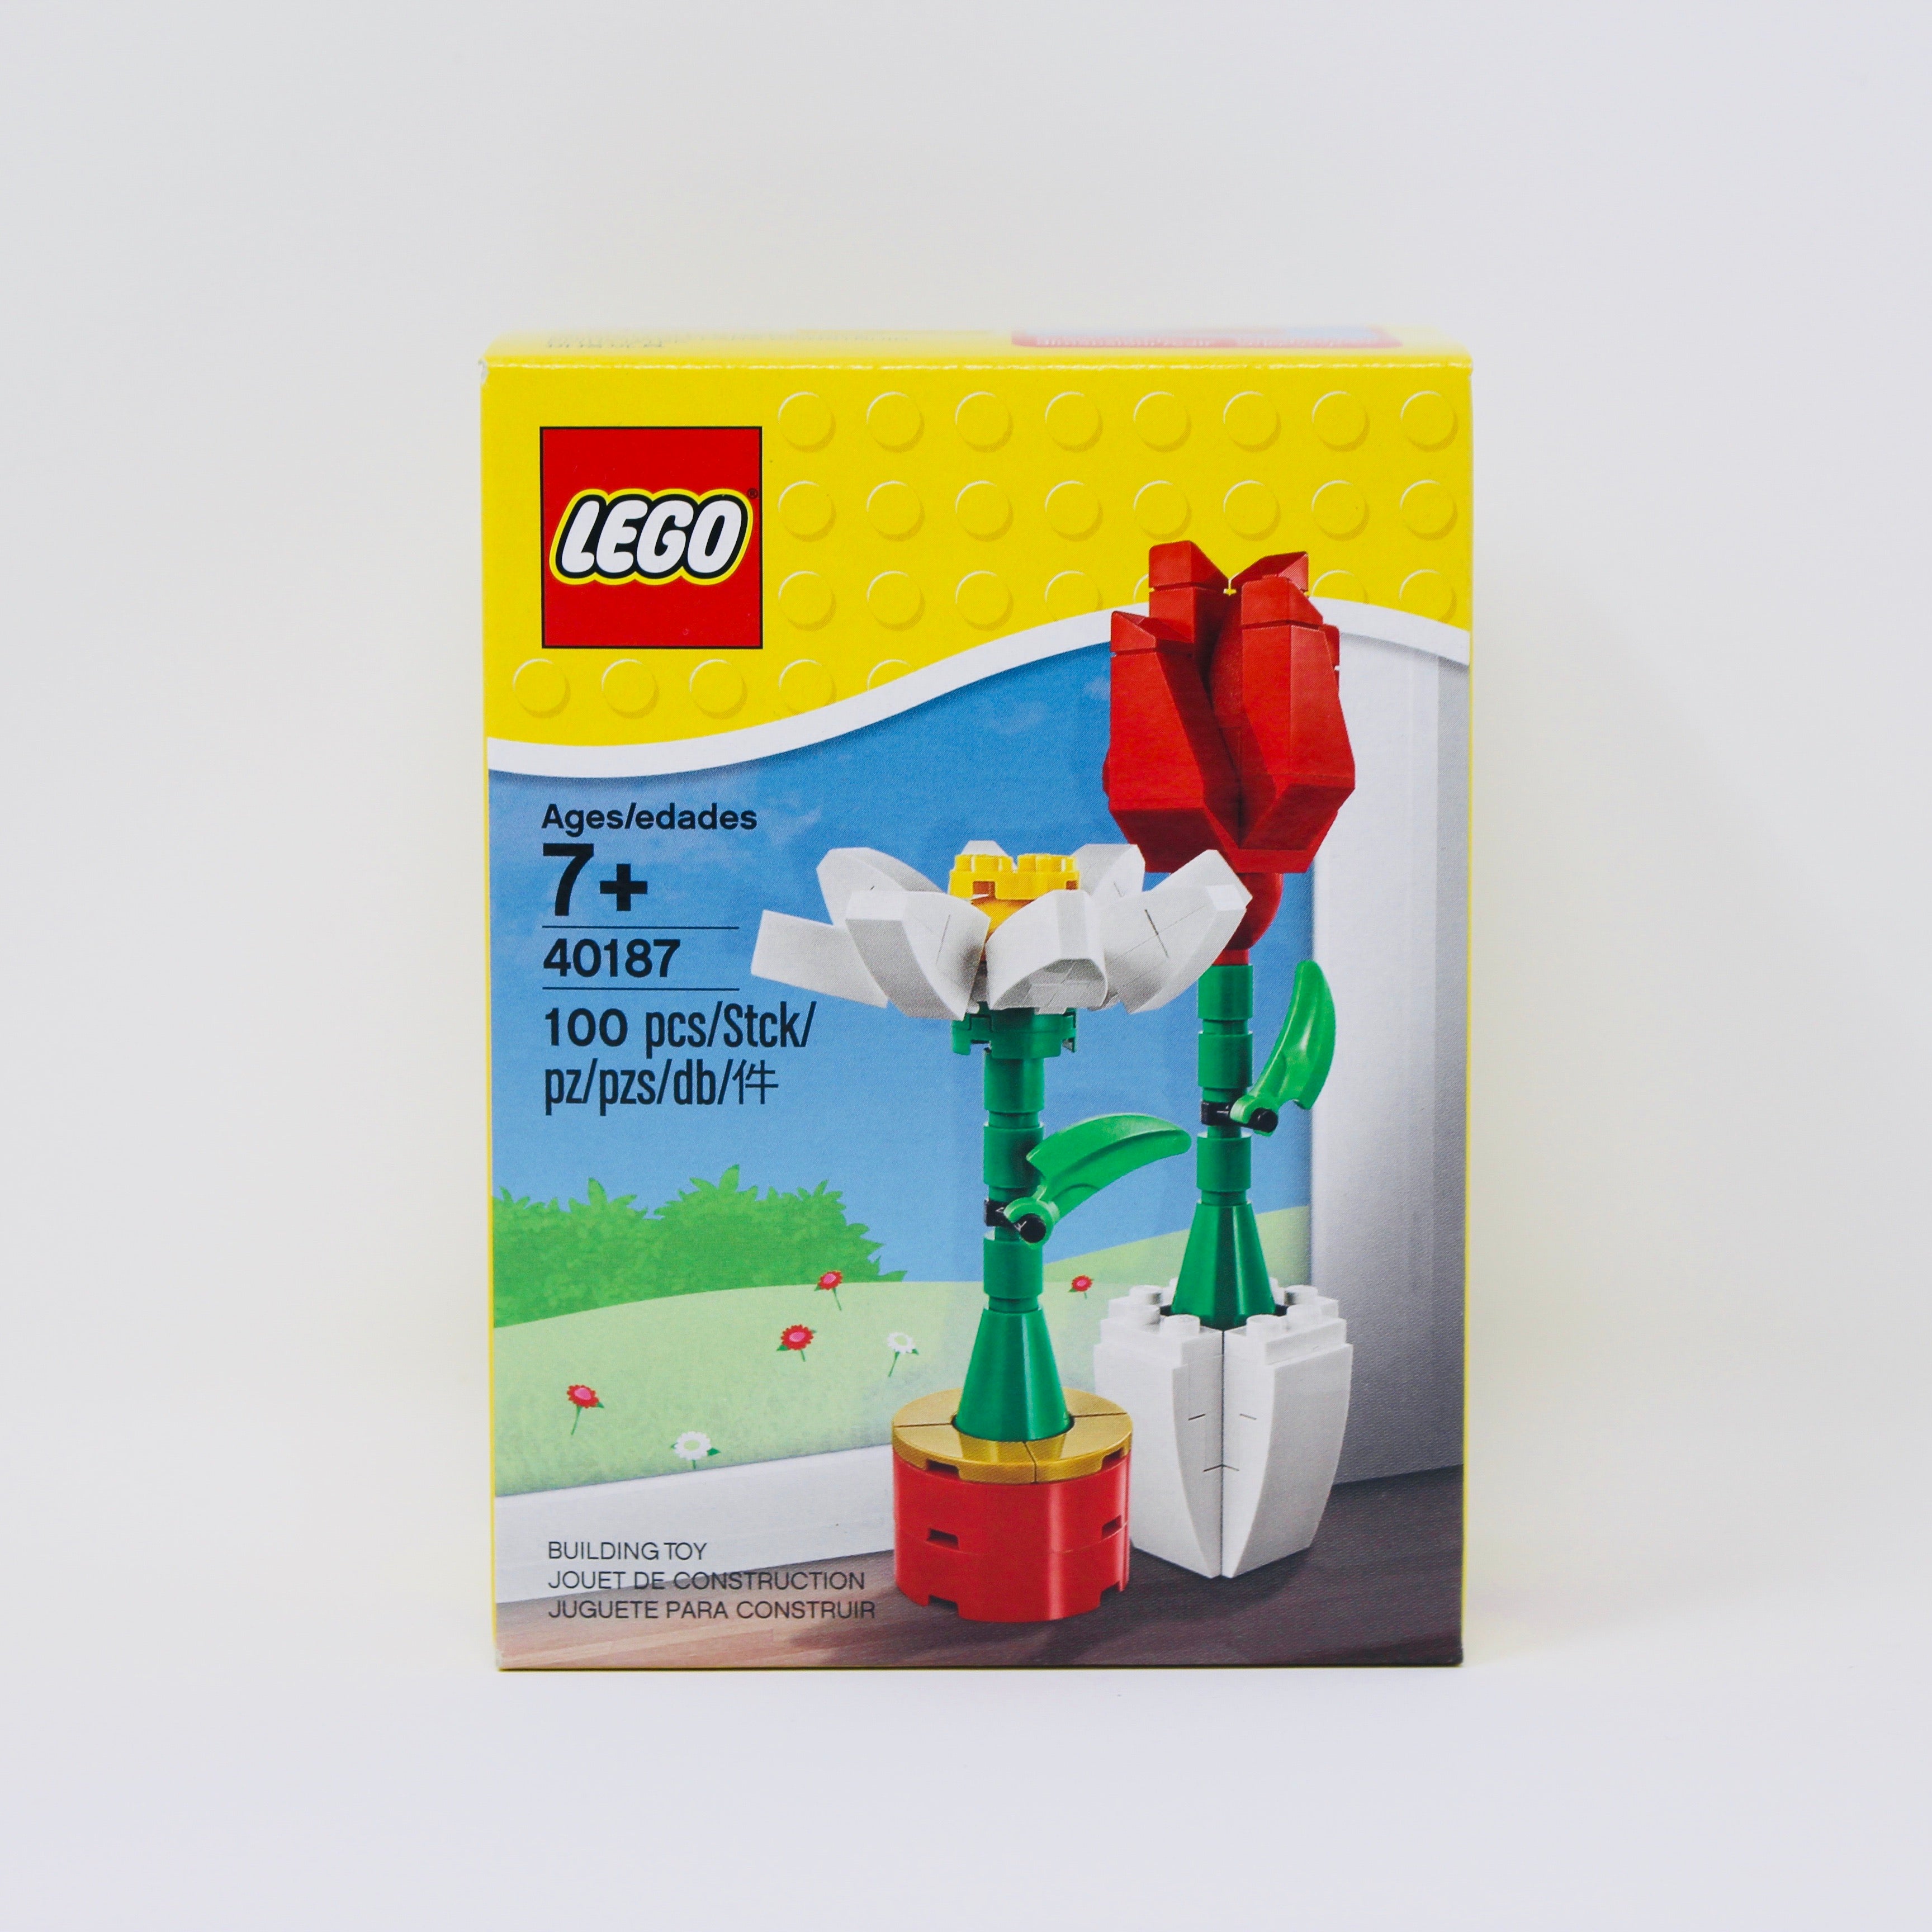 Retired Set 40187 LEGO Flower Display